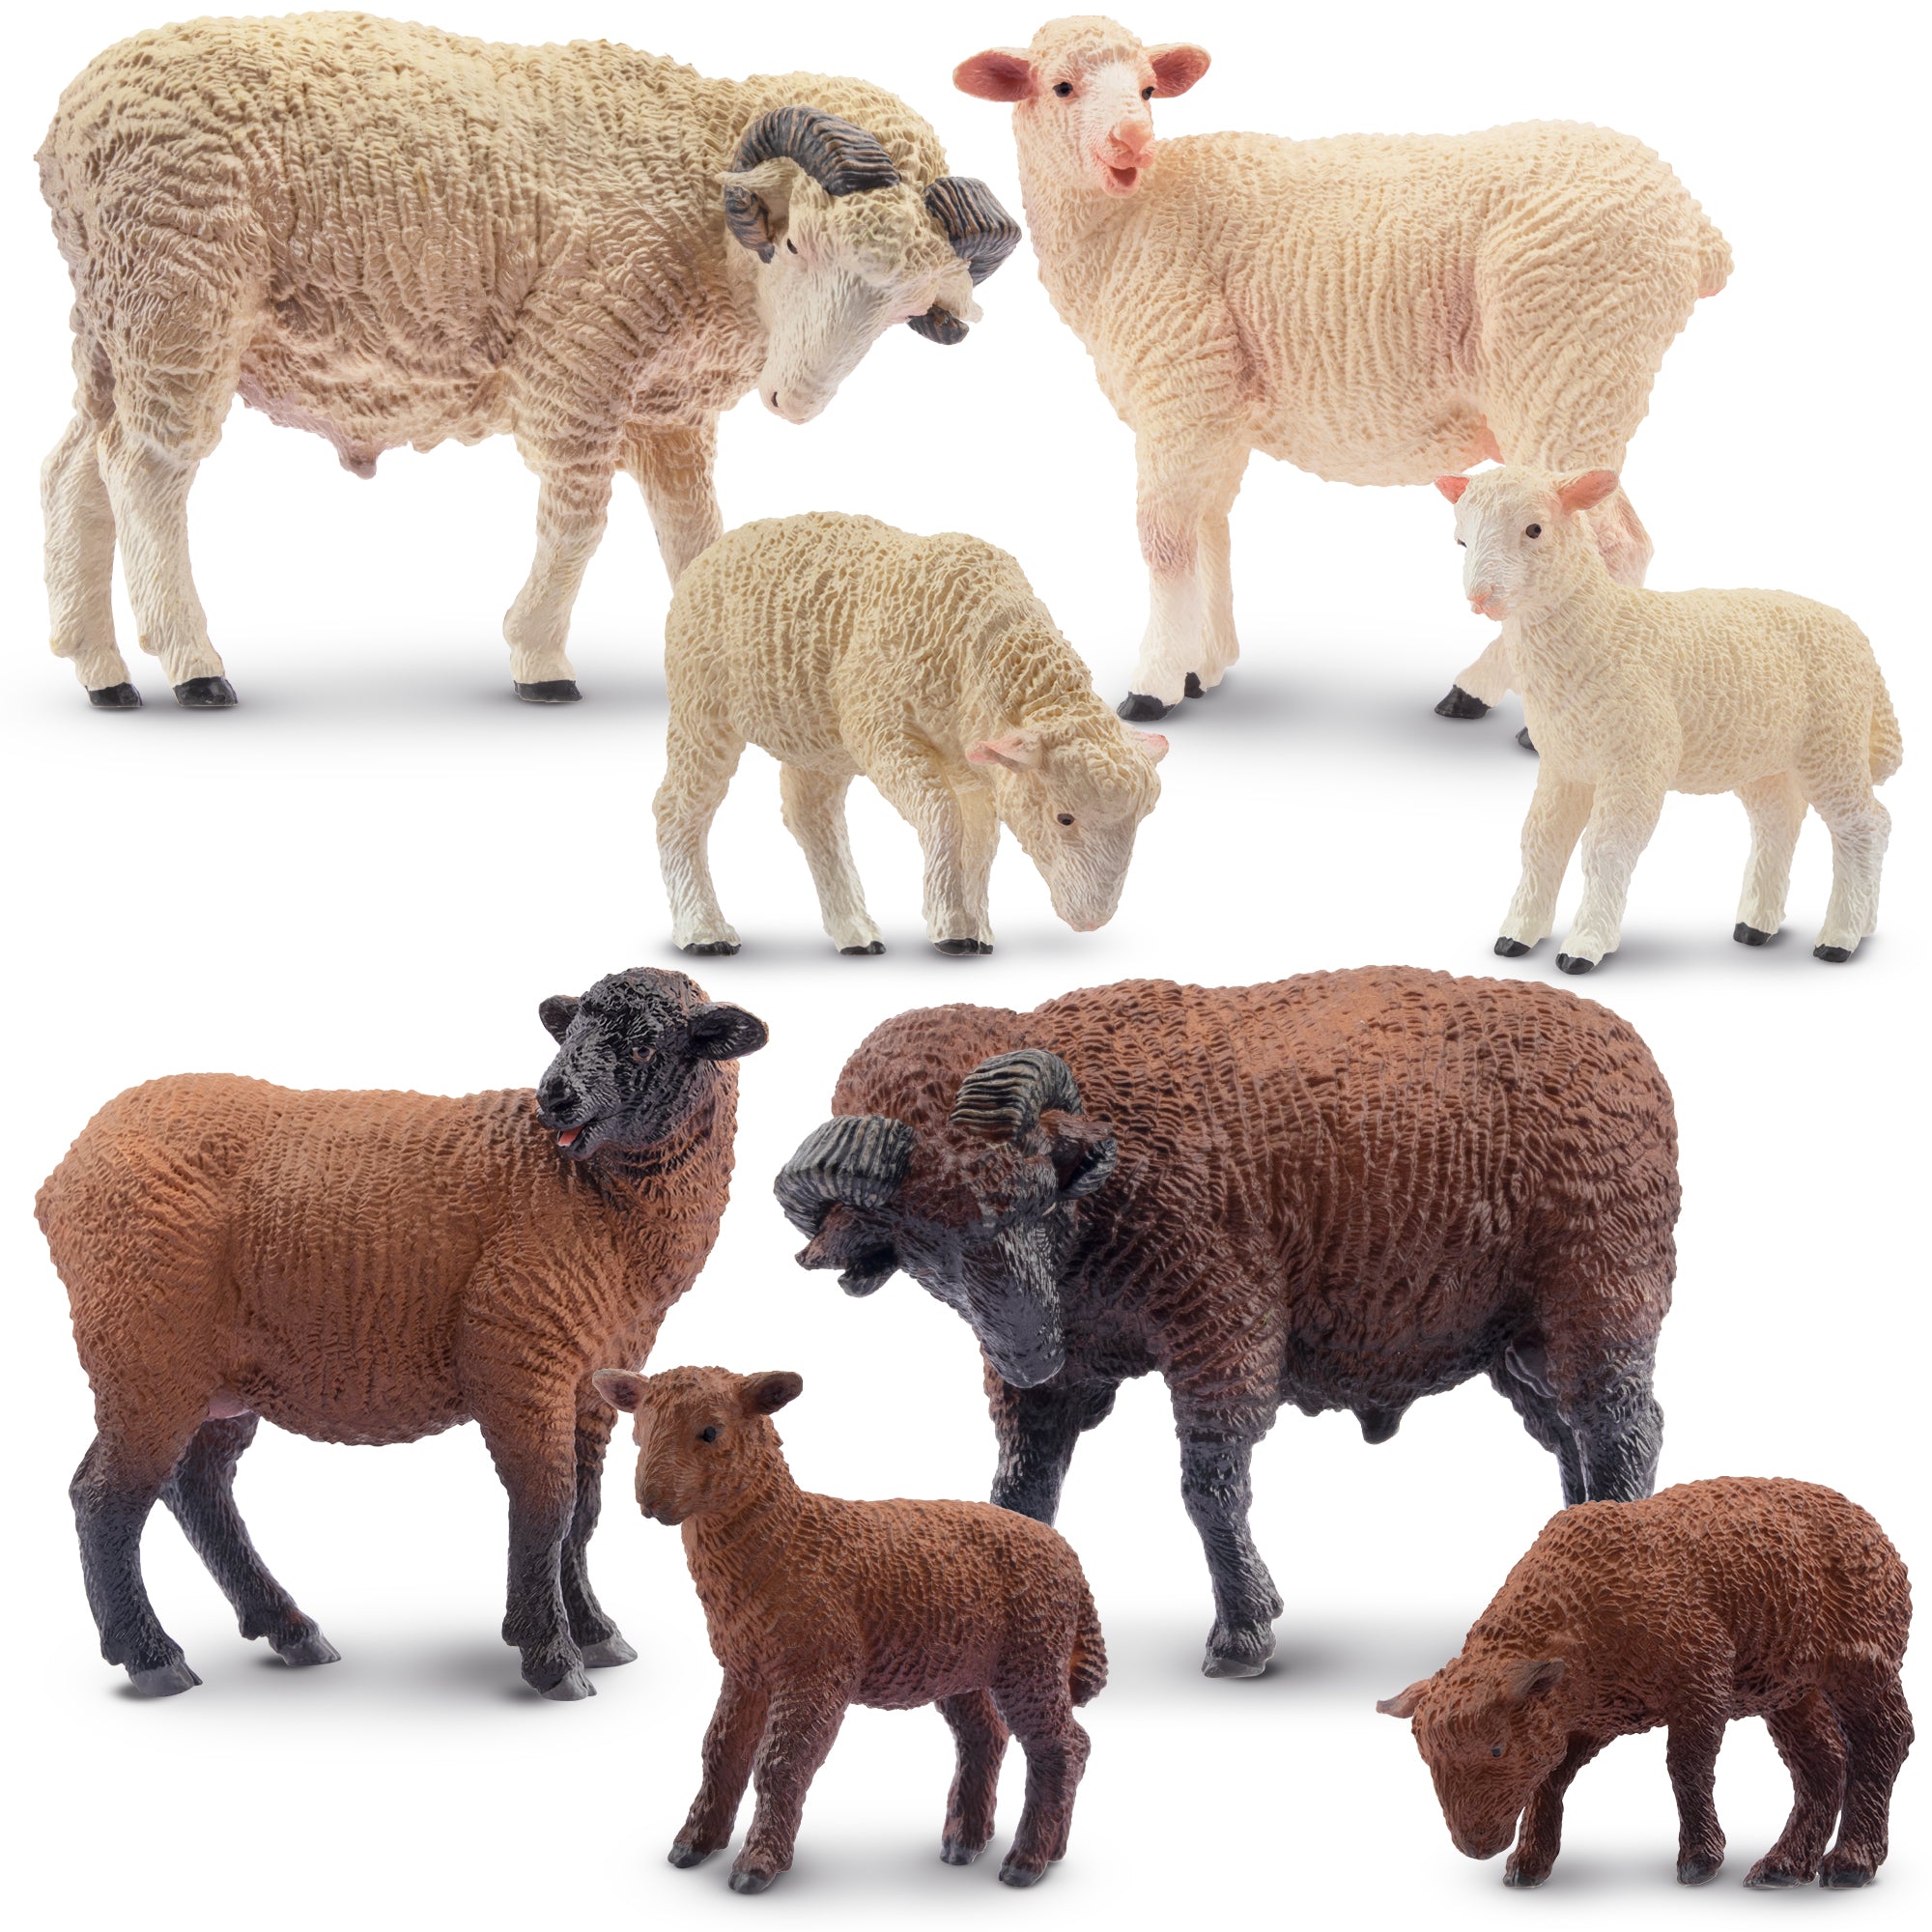 8-Piece Merino Sheep Figurines Playset with Adult & Baby Sheep